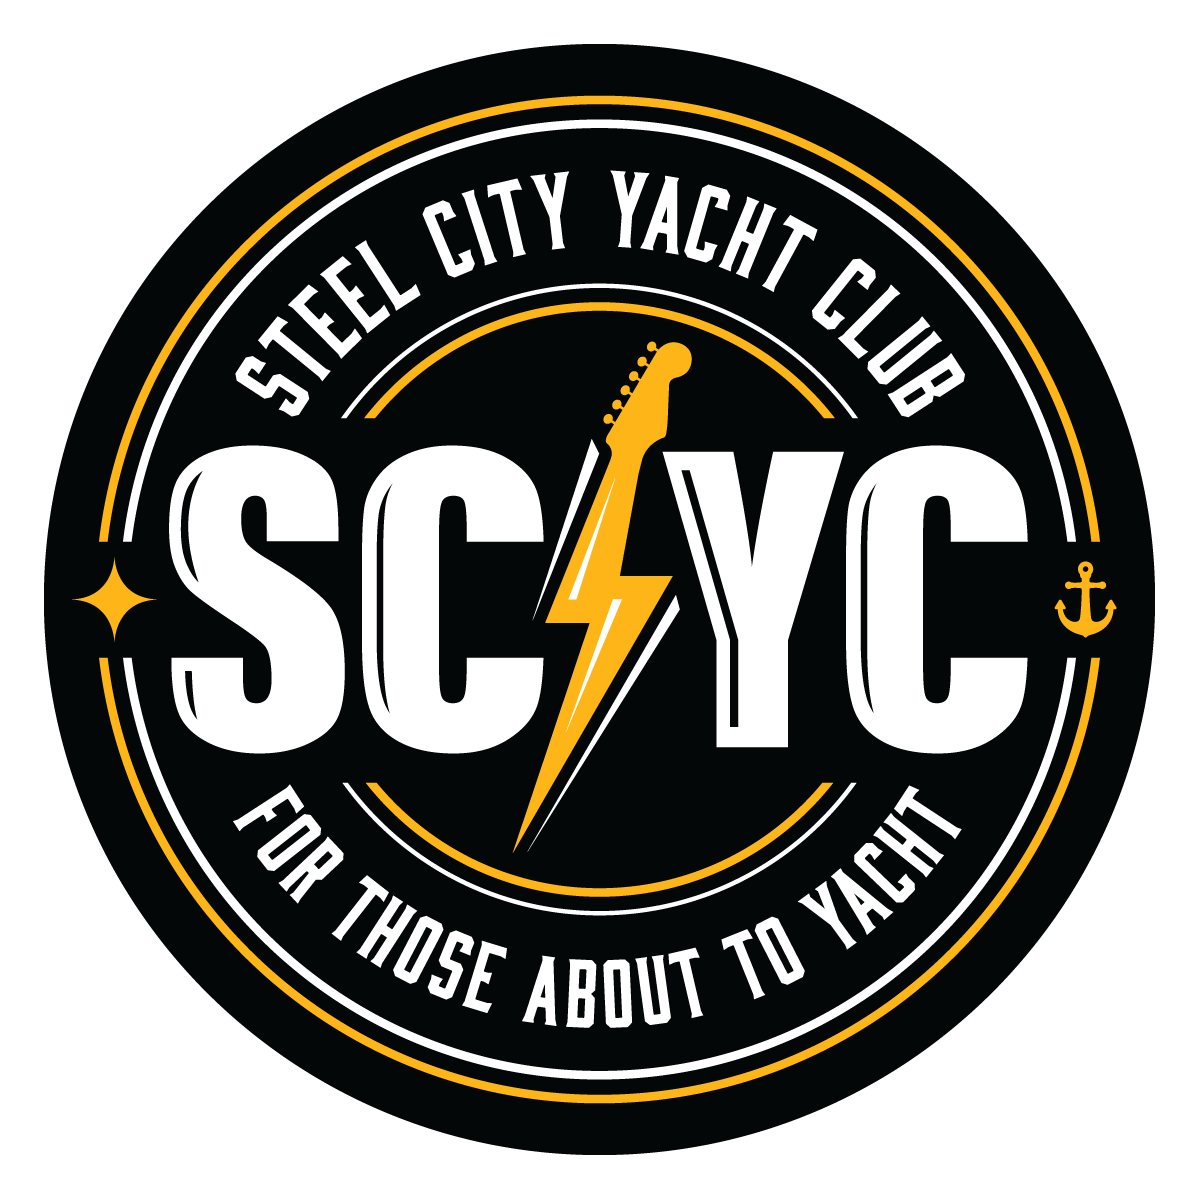 steel city yacht club band